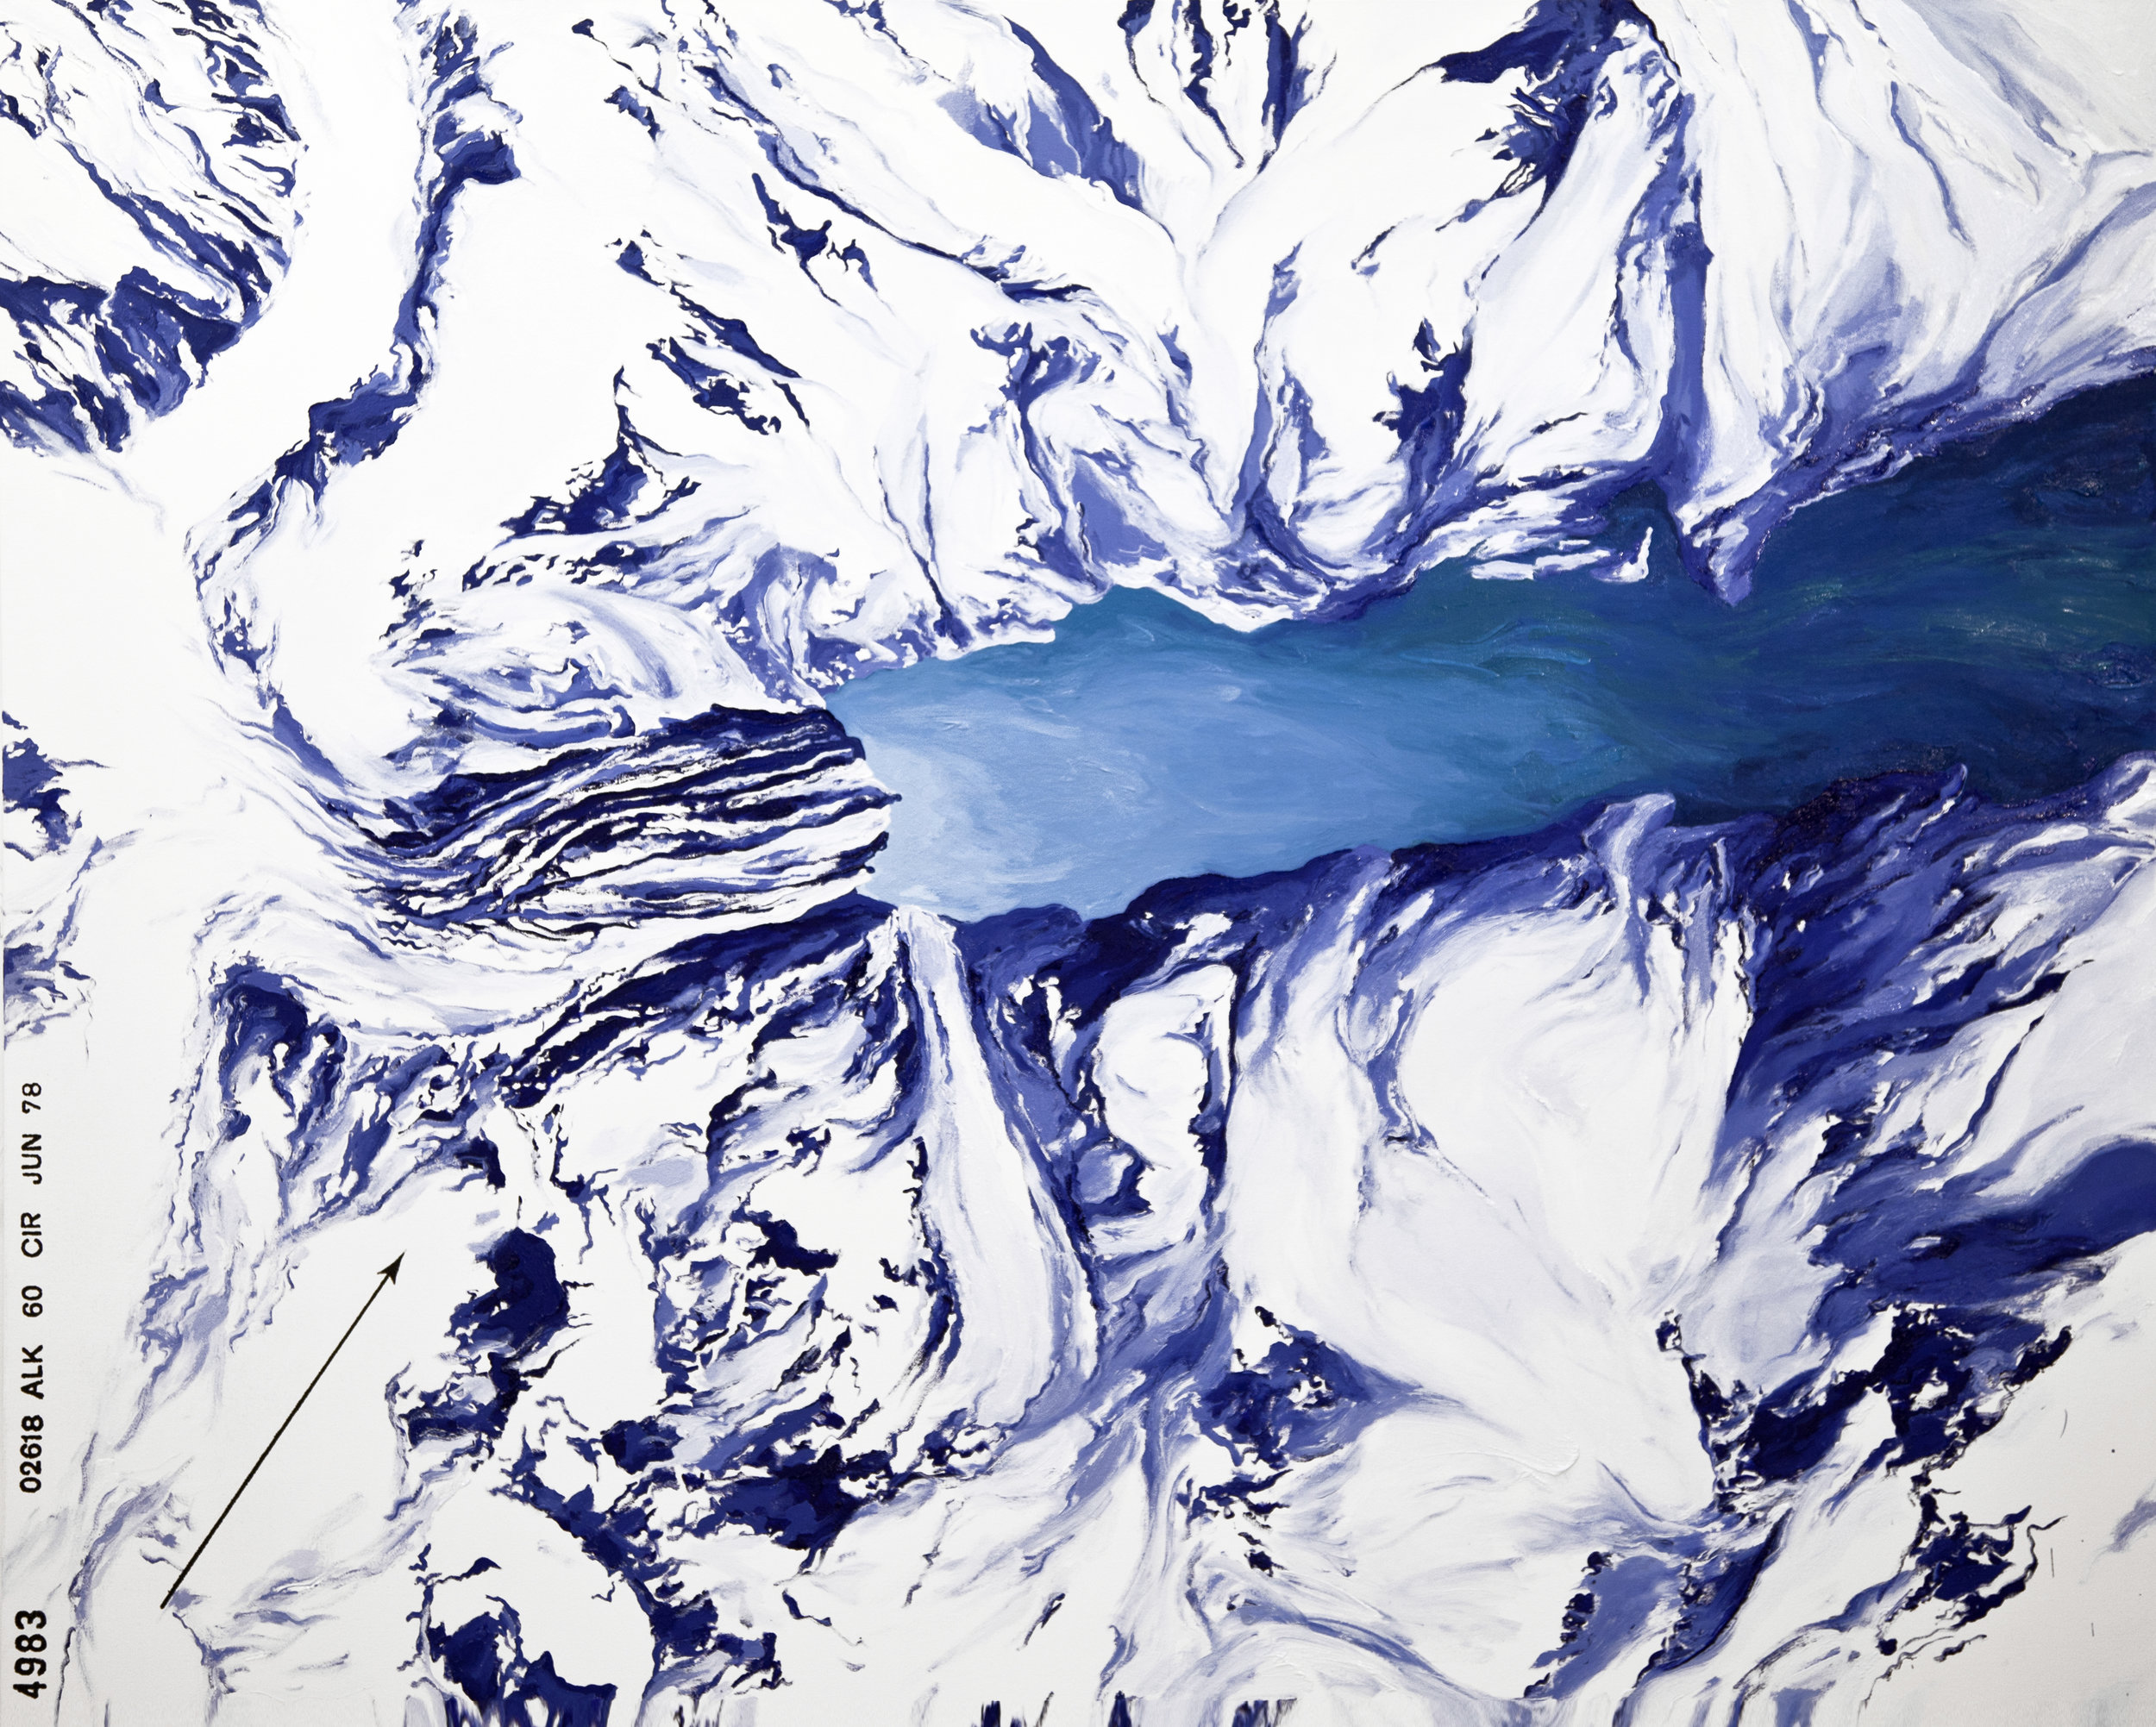 Johns Hopkins, Gilman Glacier, 1978 (USGS)